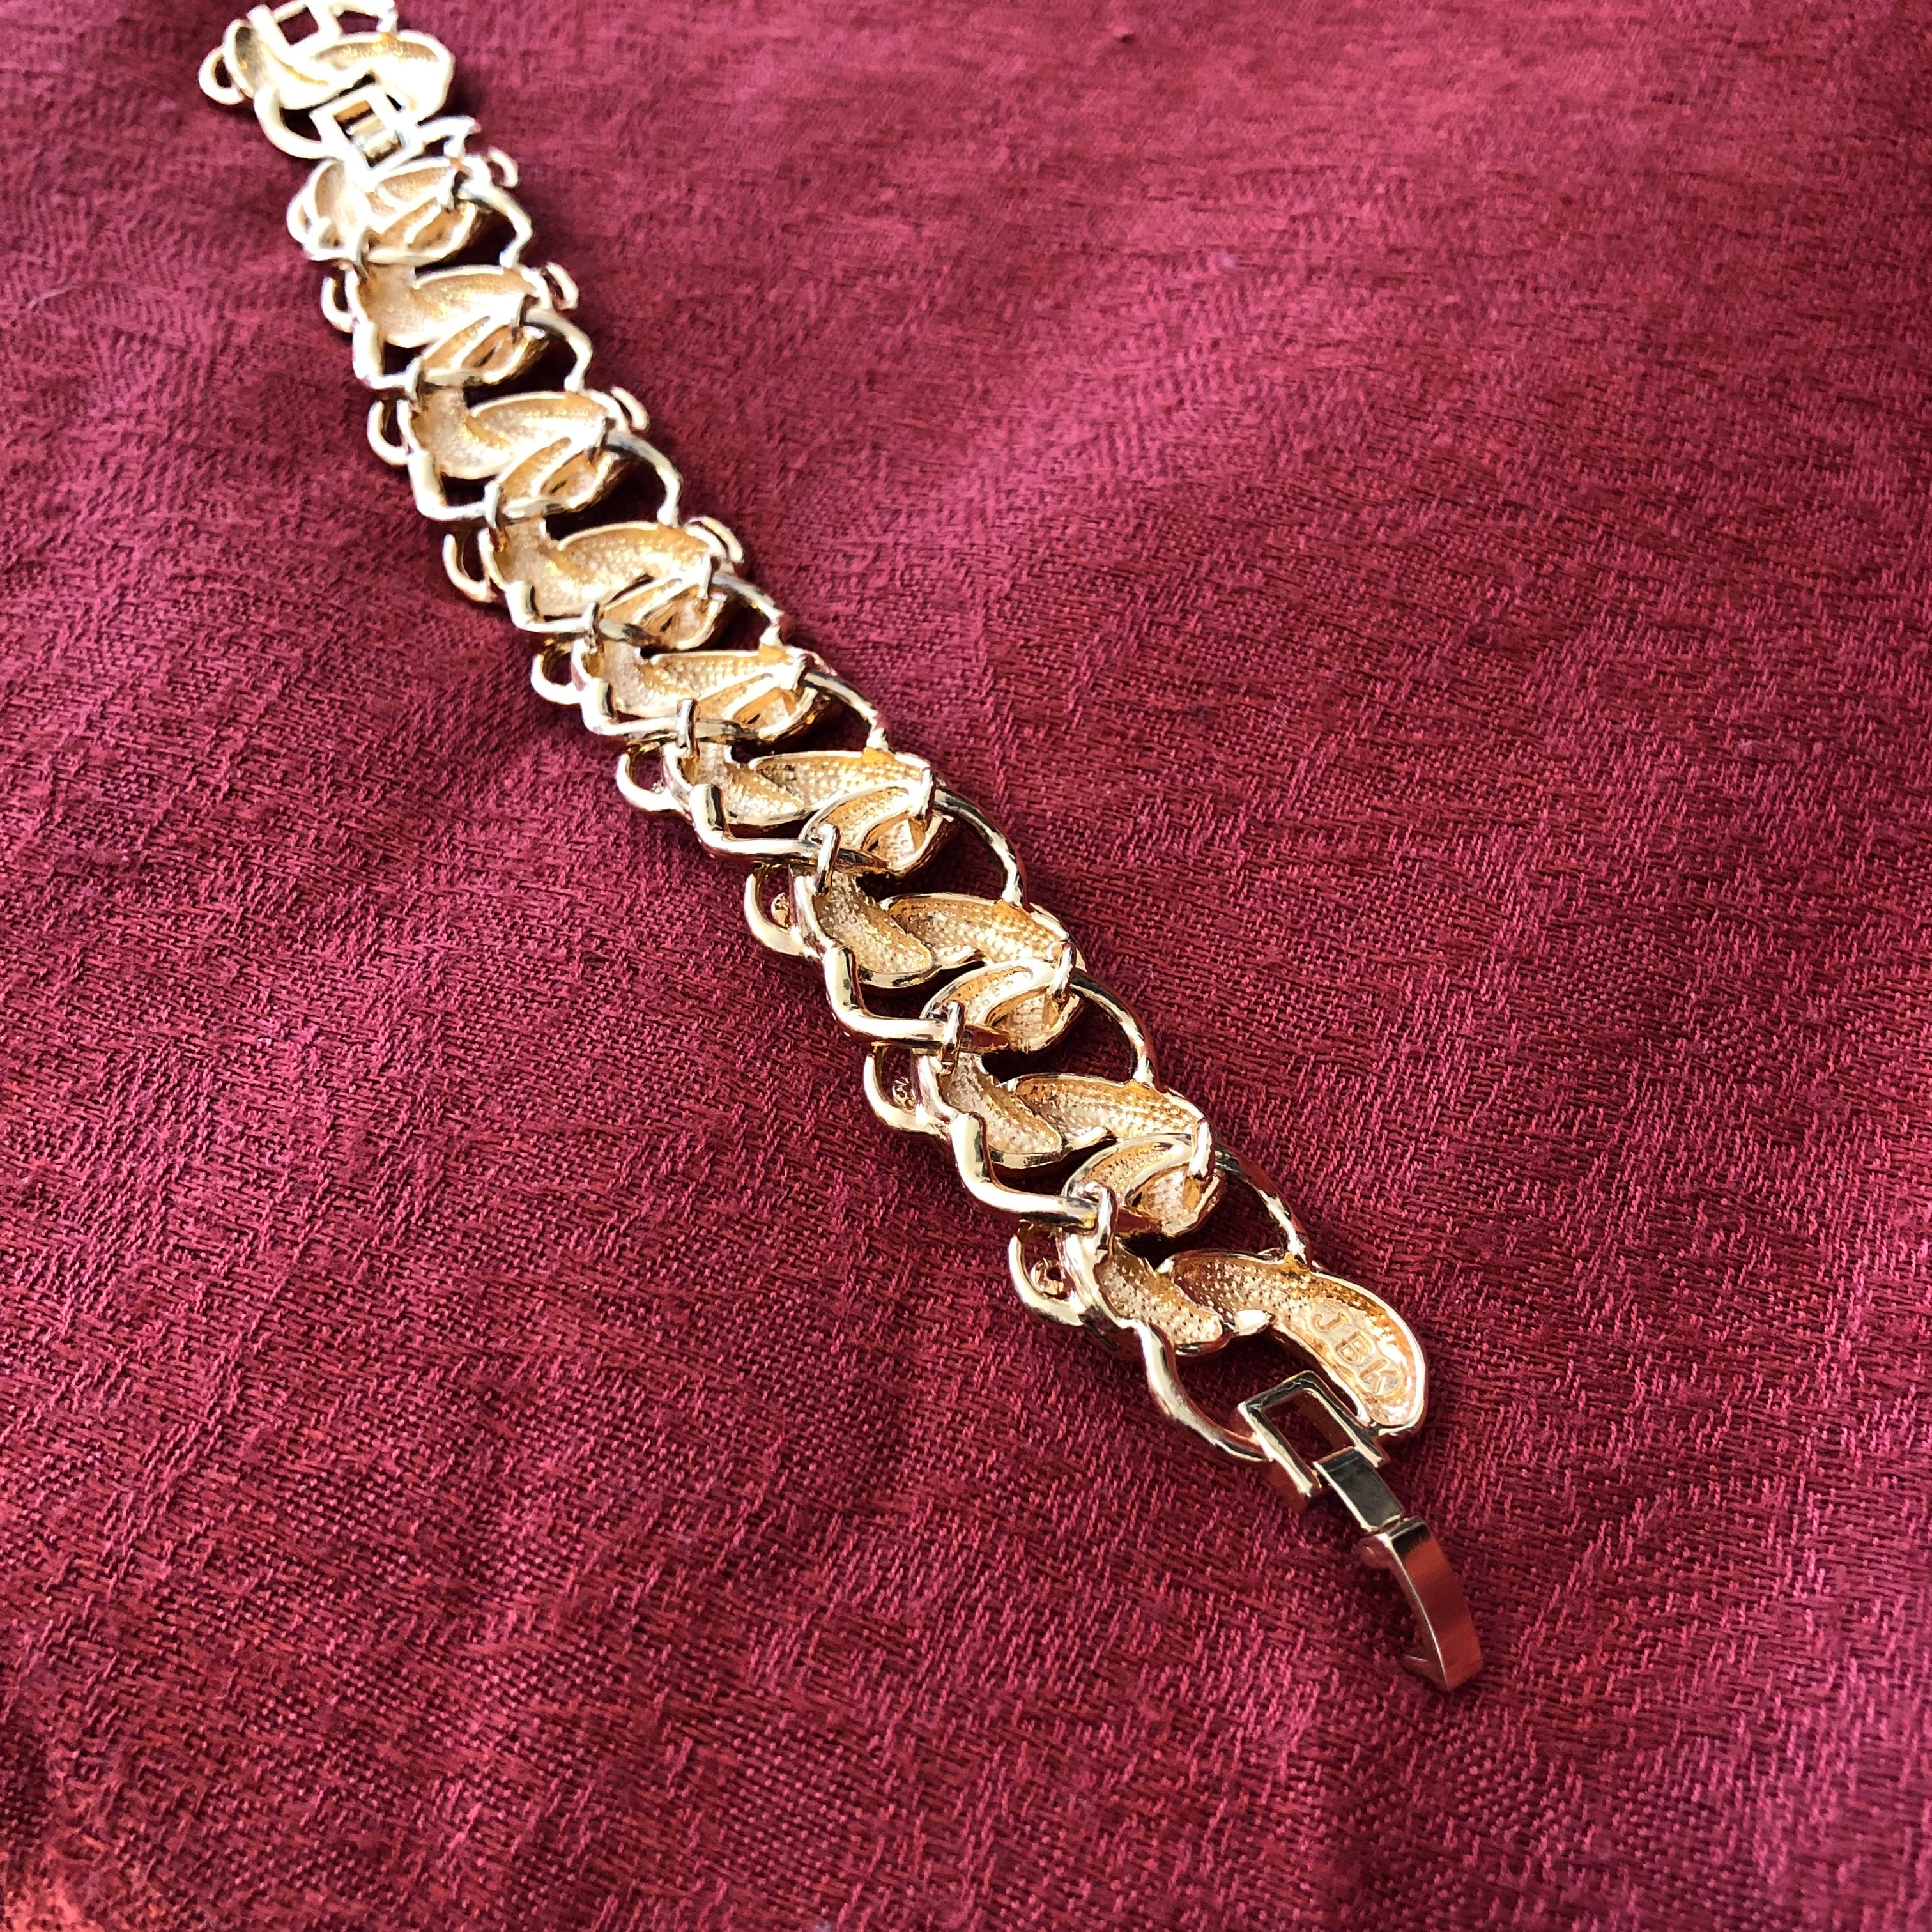 Camrose & Kross Jacqueline Kennedy Collection Castellani Wedding Bracelet |  eBay